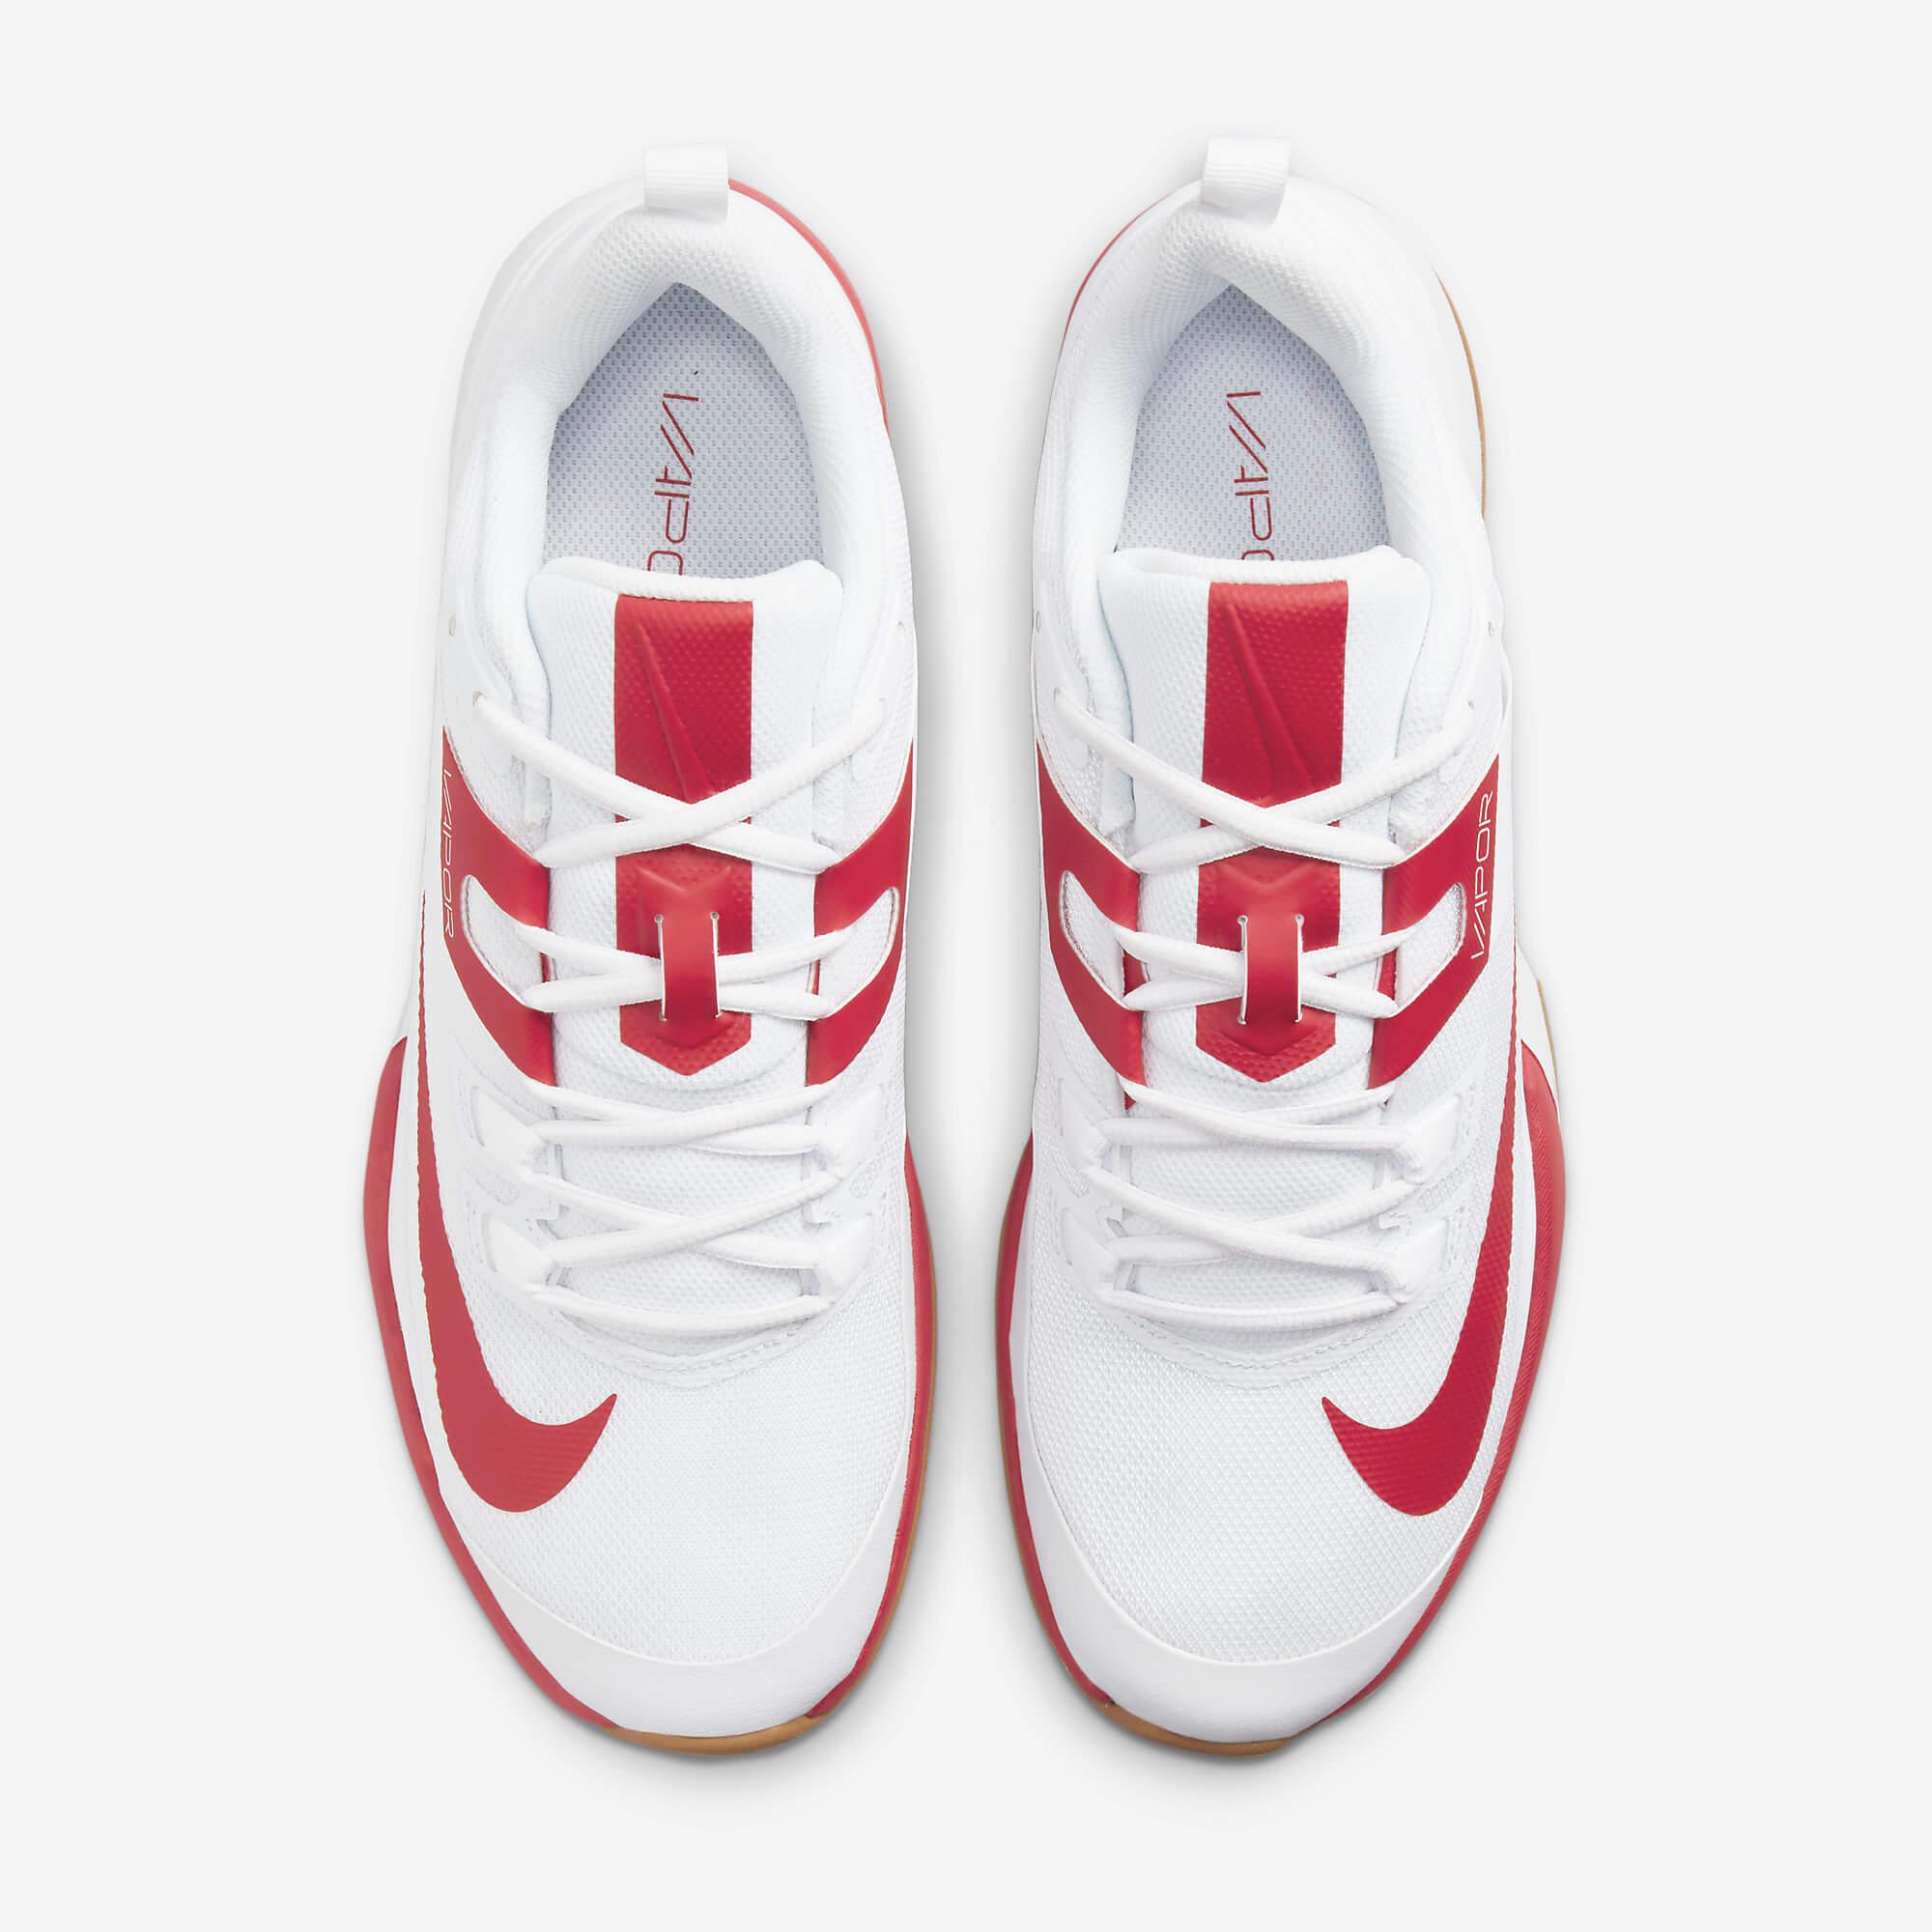 Nike Mens Vapor Lite Clay Tennis Shoes - White/University Red ...